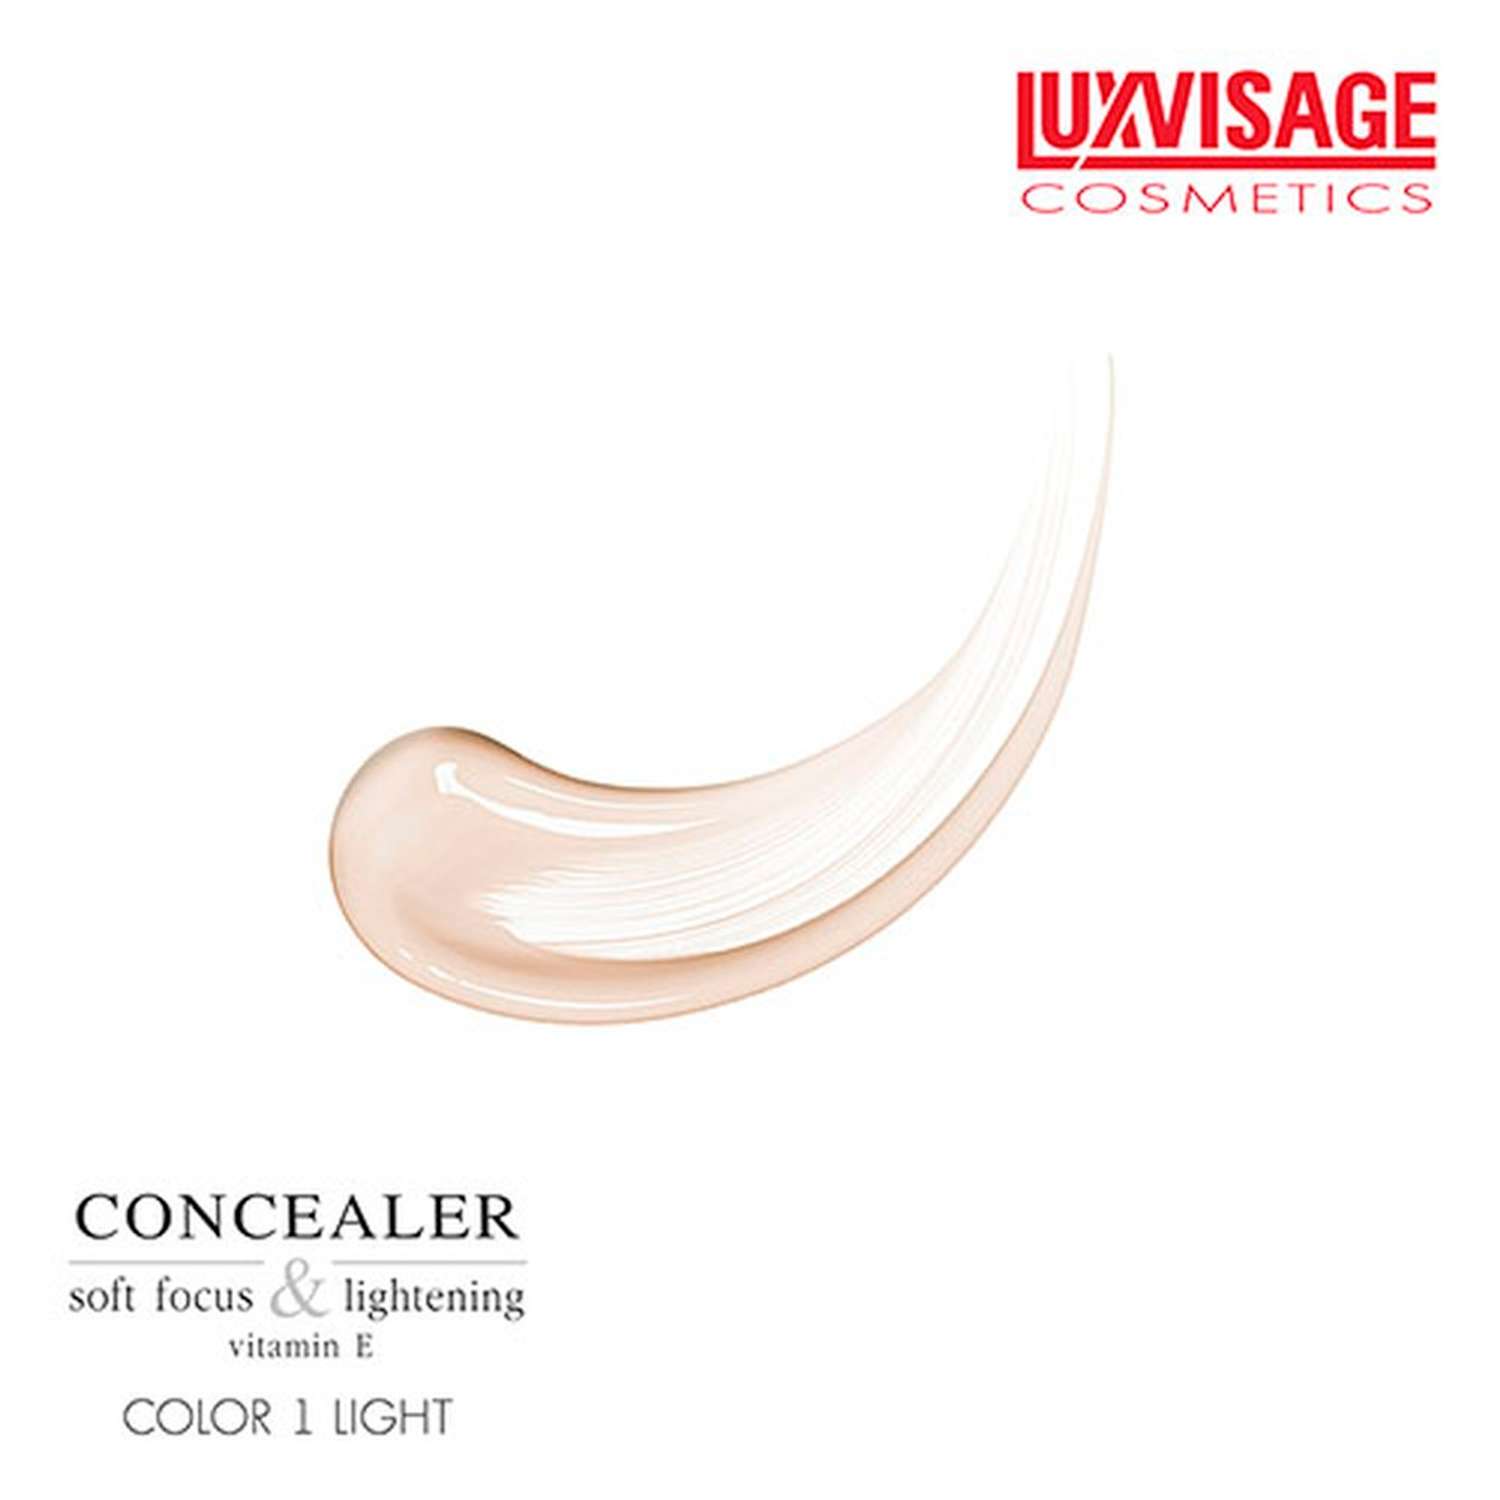 Консилер Luxvisage тон 1 light - фото 3